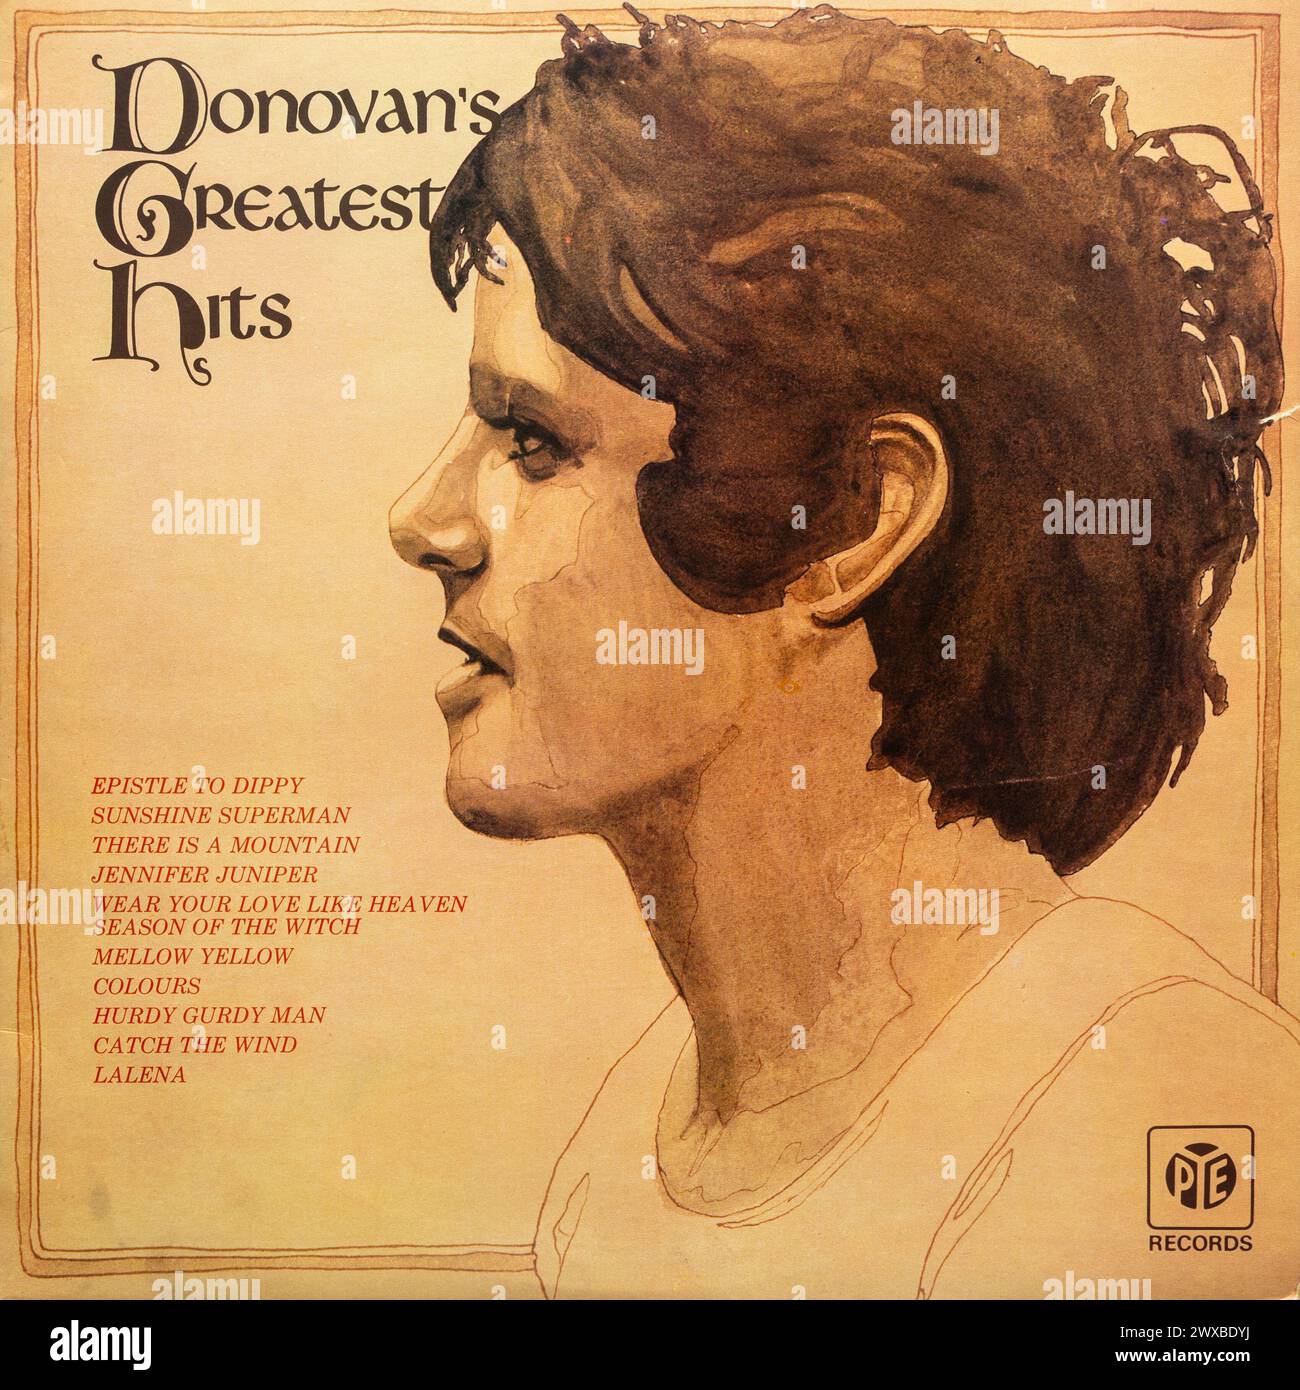 Donovan's Greatest Hits Vinyl Album Cover Stockfoto